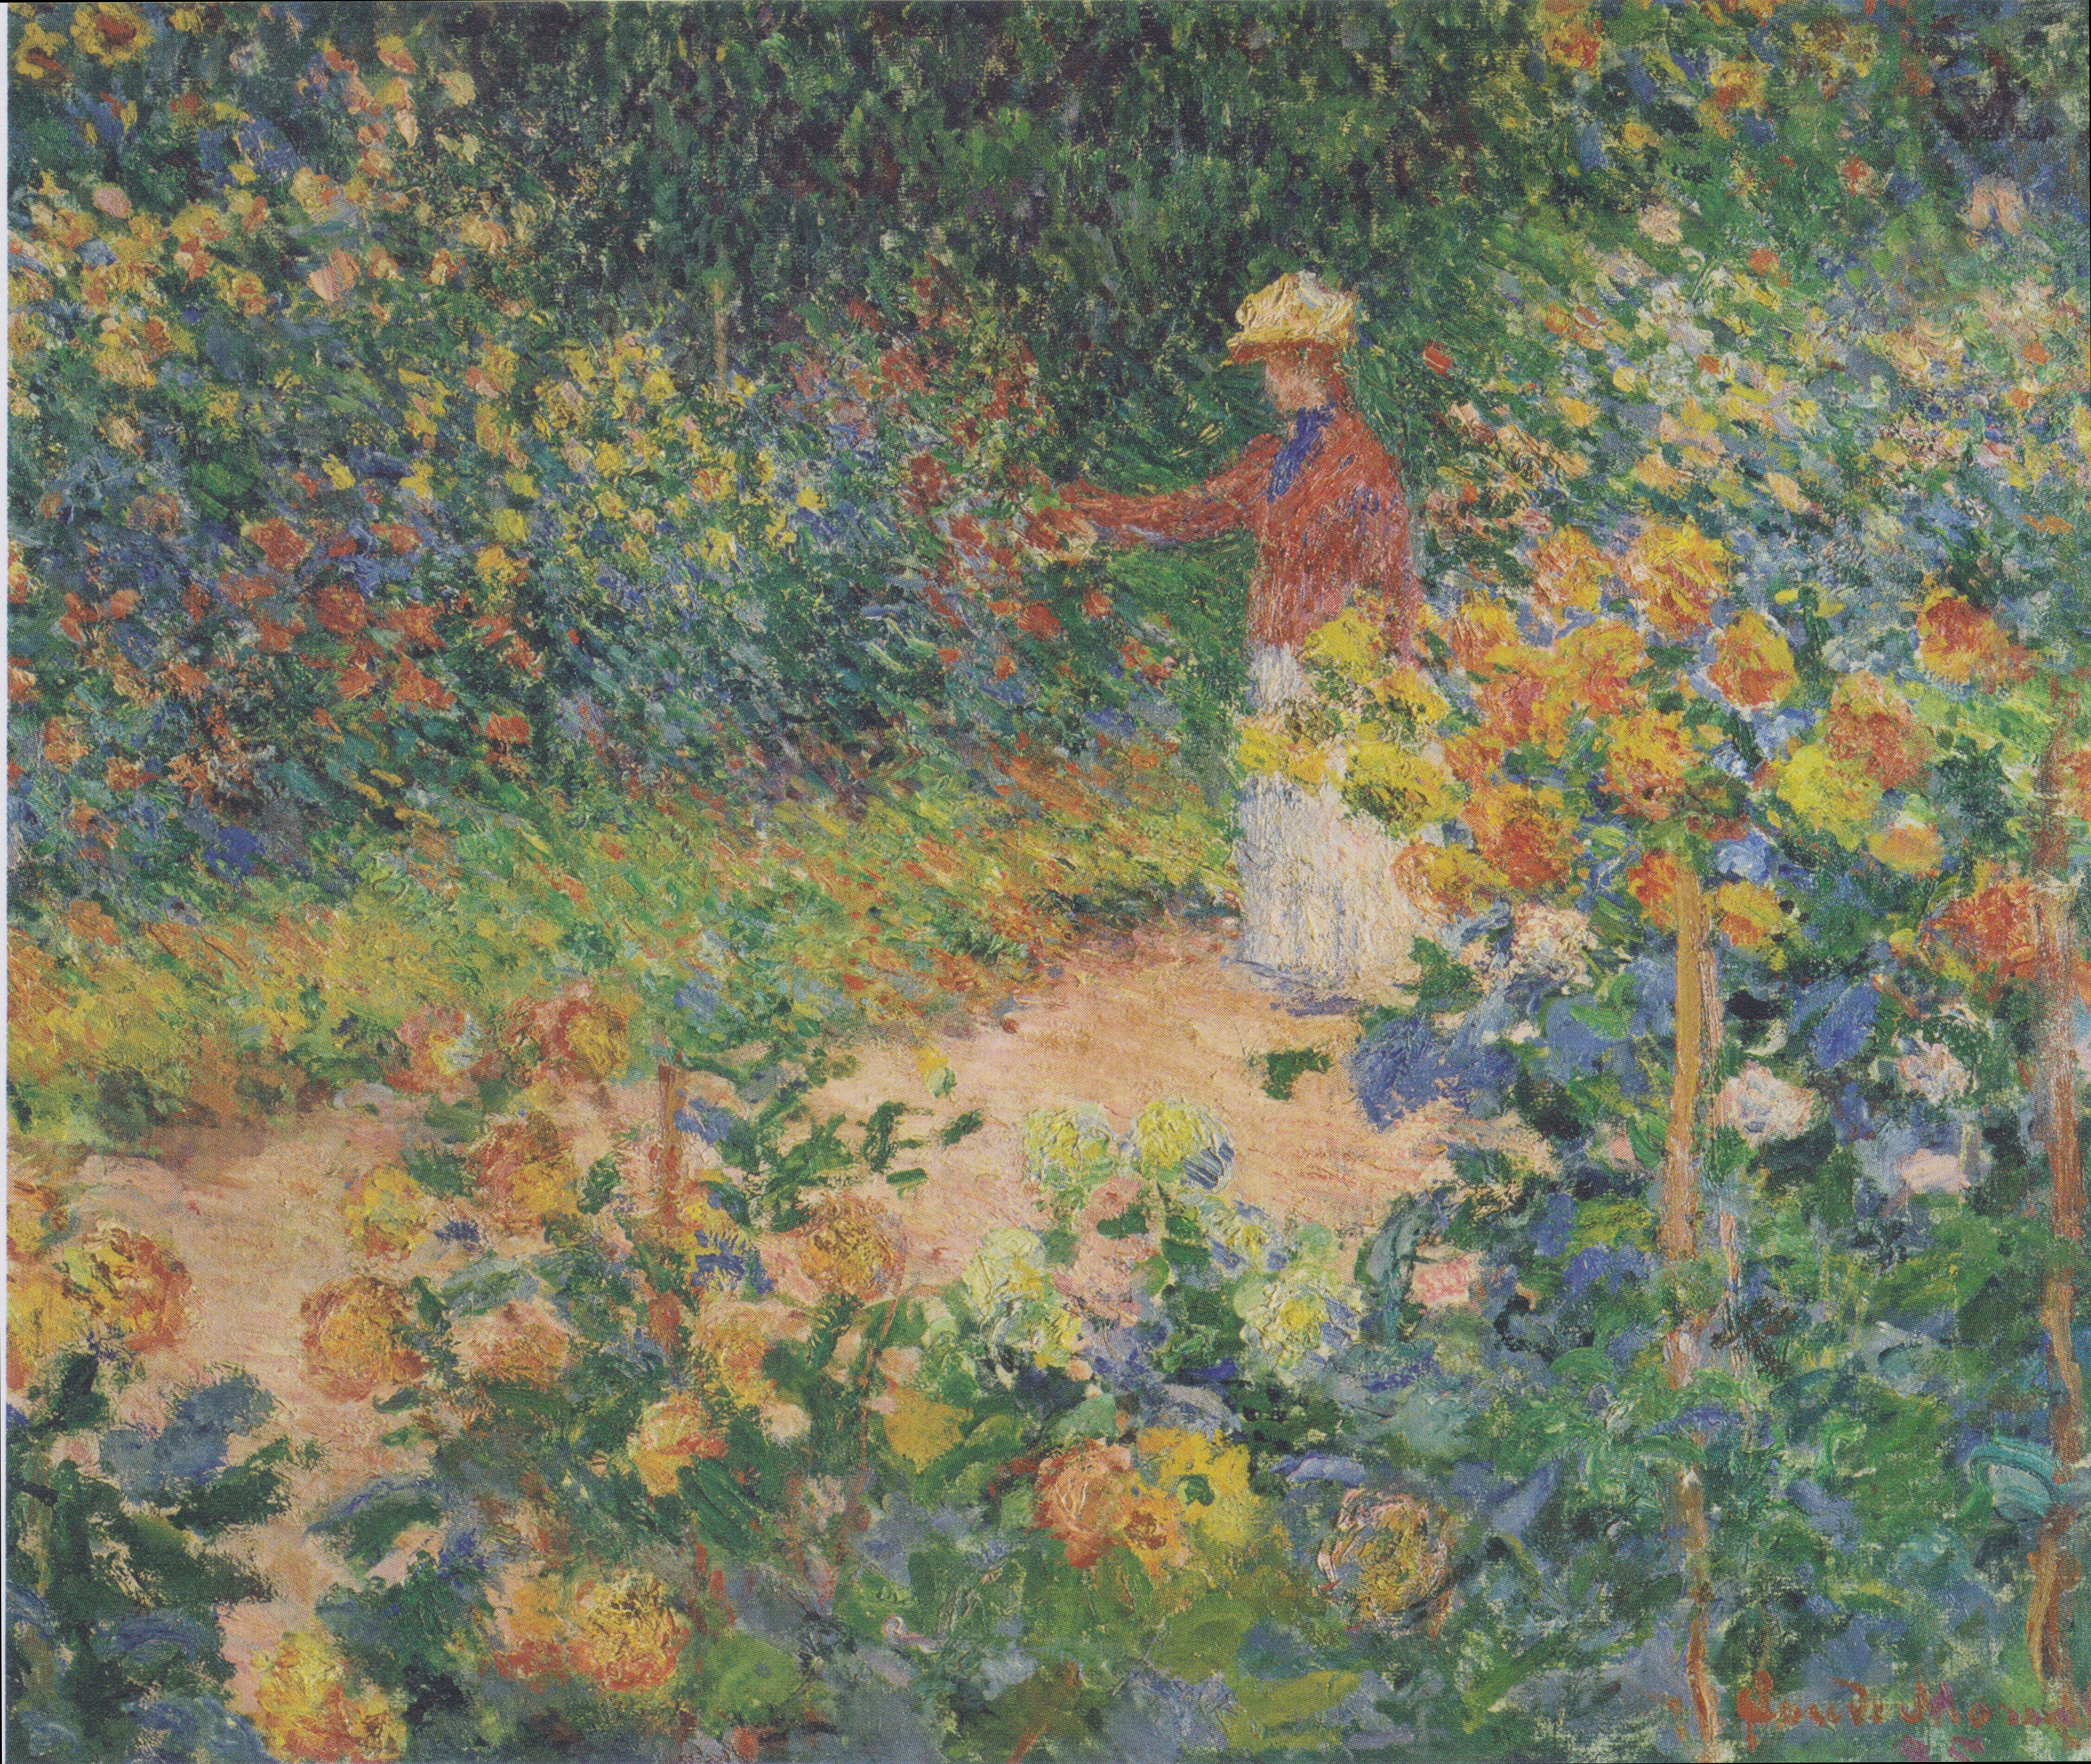 http://upload.wikimedia.org/wikipedia/commons/5/53/Monet_-_Im_Garten_-_1895.jpeg?uselang=fr